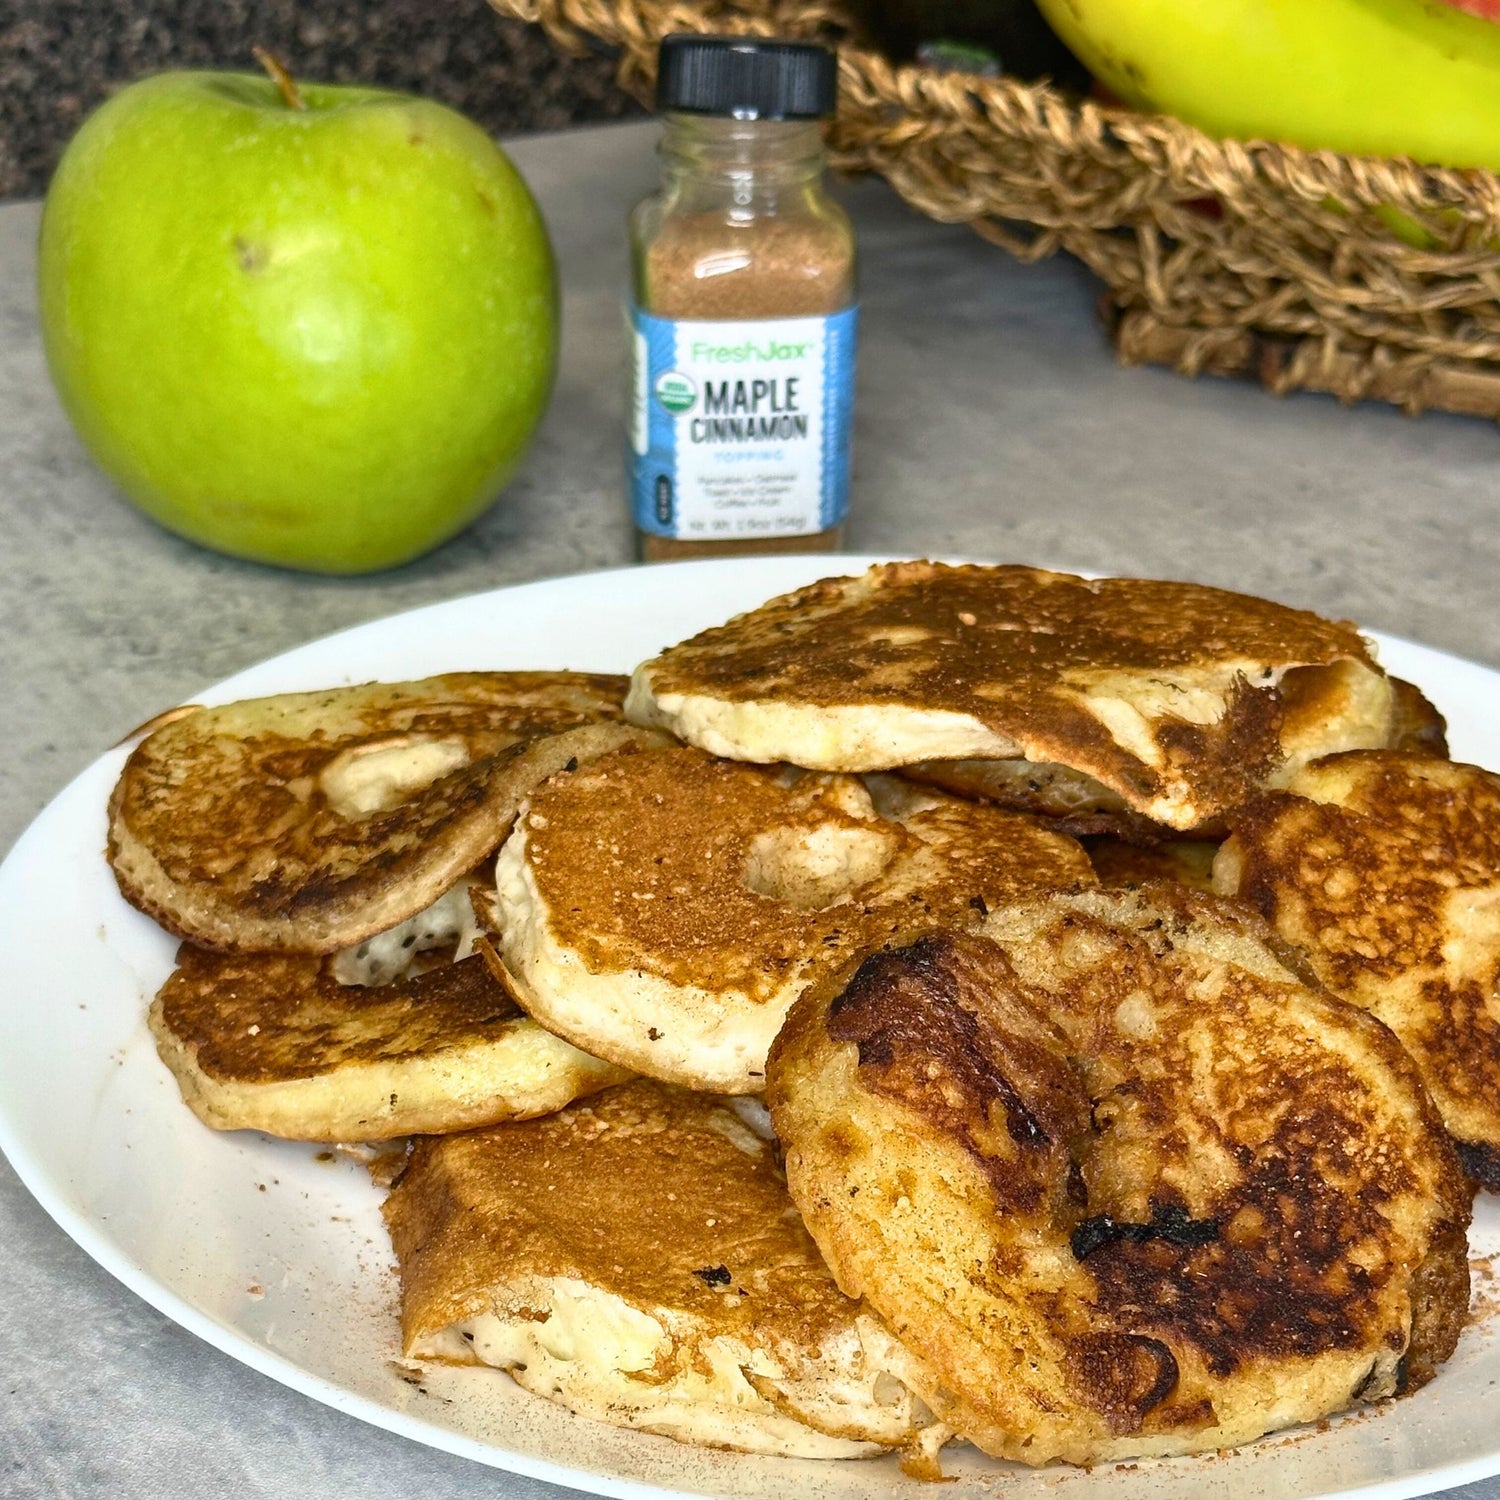 Sephora's Maple Cinnamon Apple Pancakes